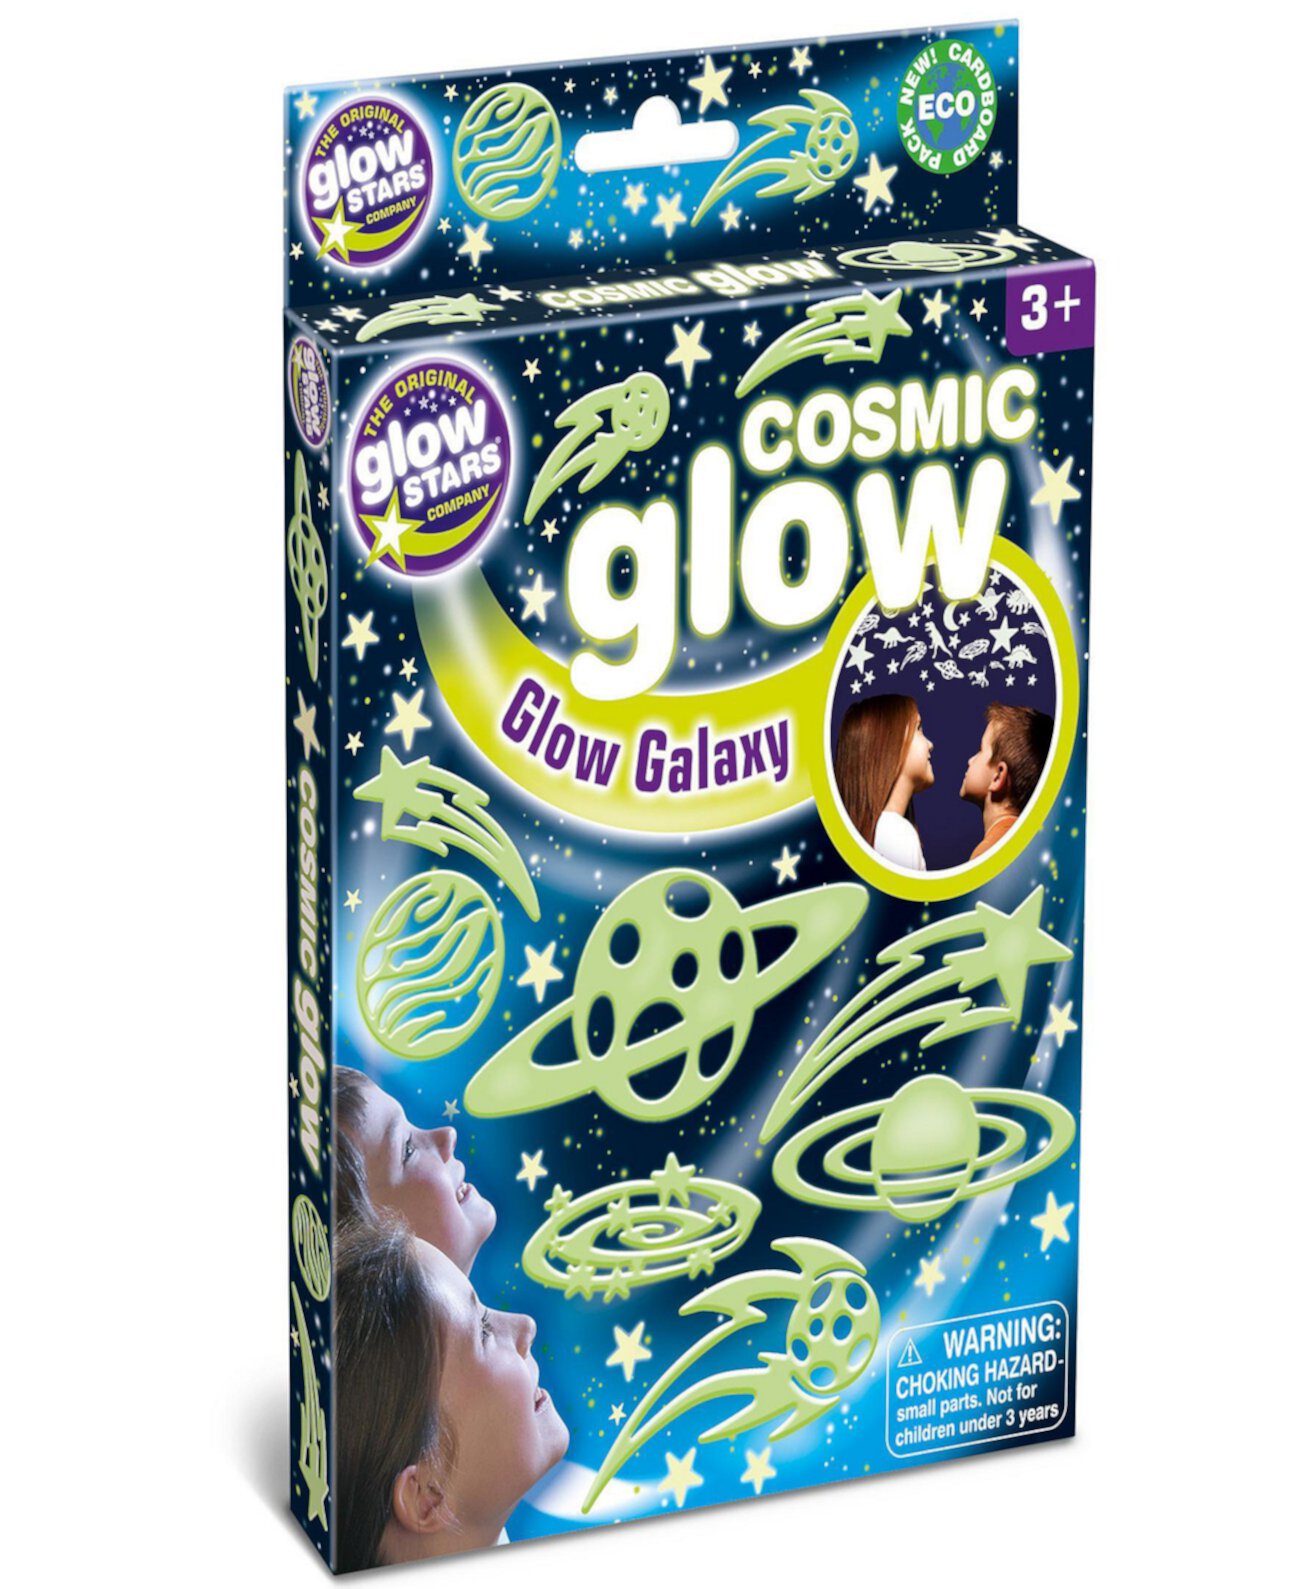 The Original Glowstars Cosmic Glow Galaxy Craft Kit Brainstorm Toys